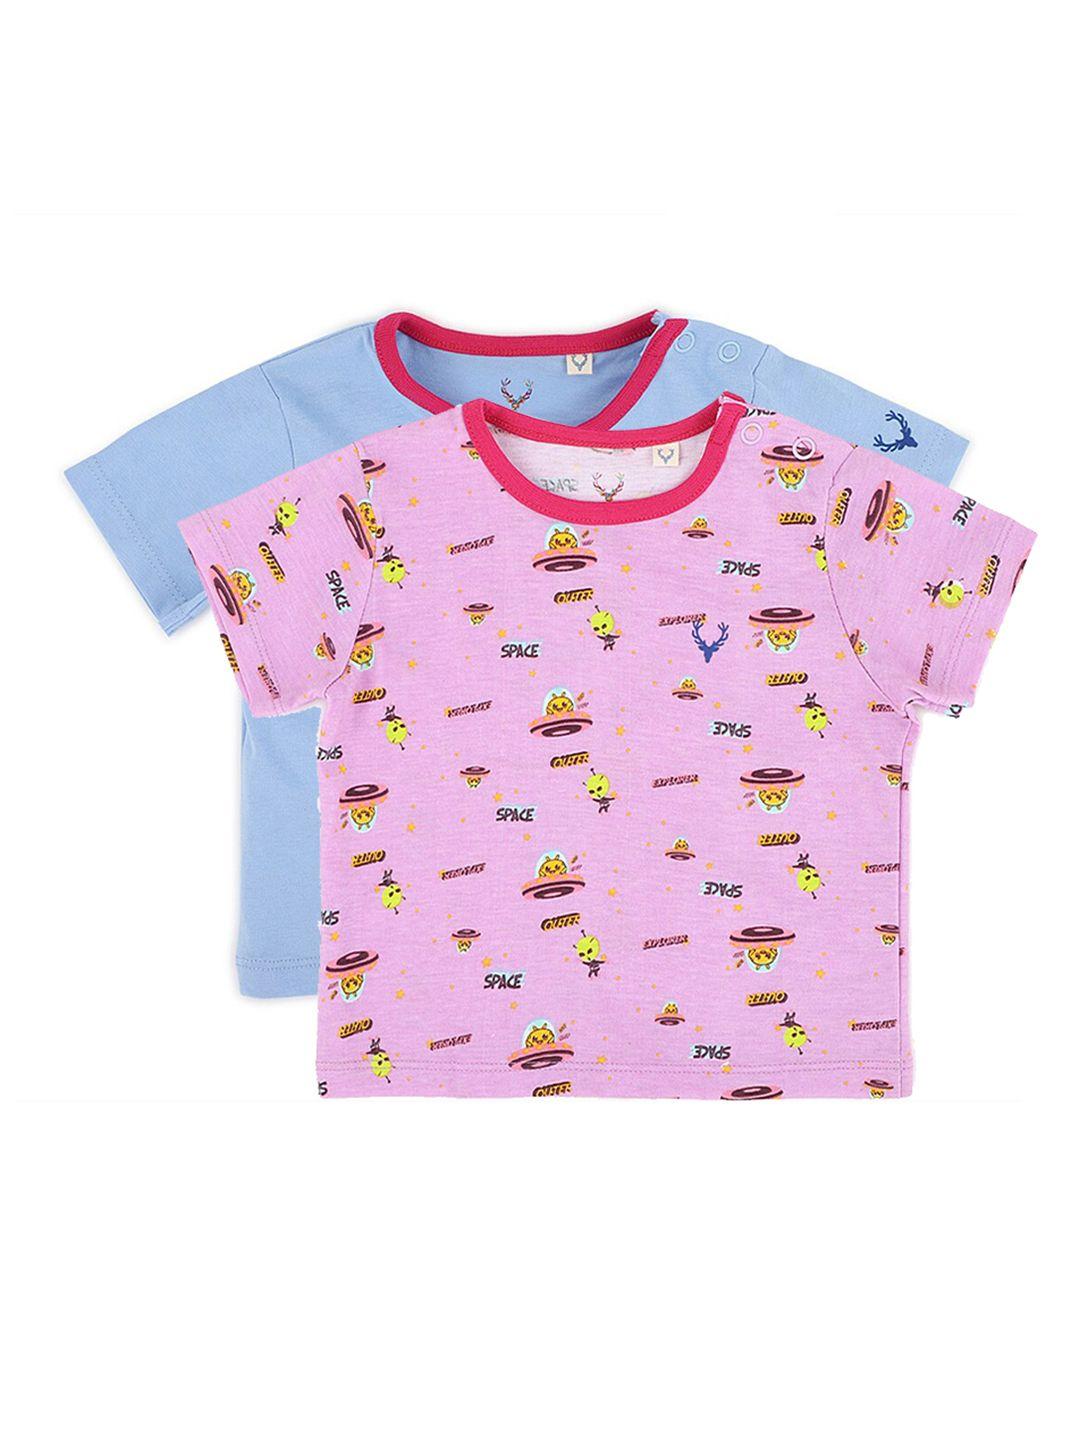 allen solly junior boys pink 2 printed t-shirt